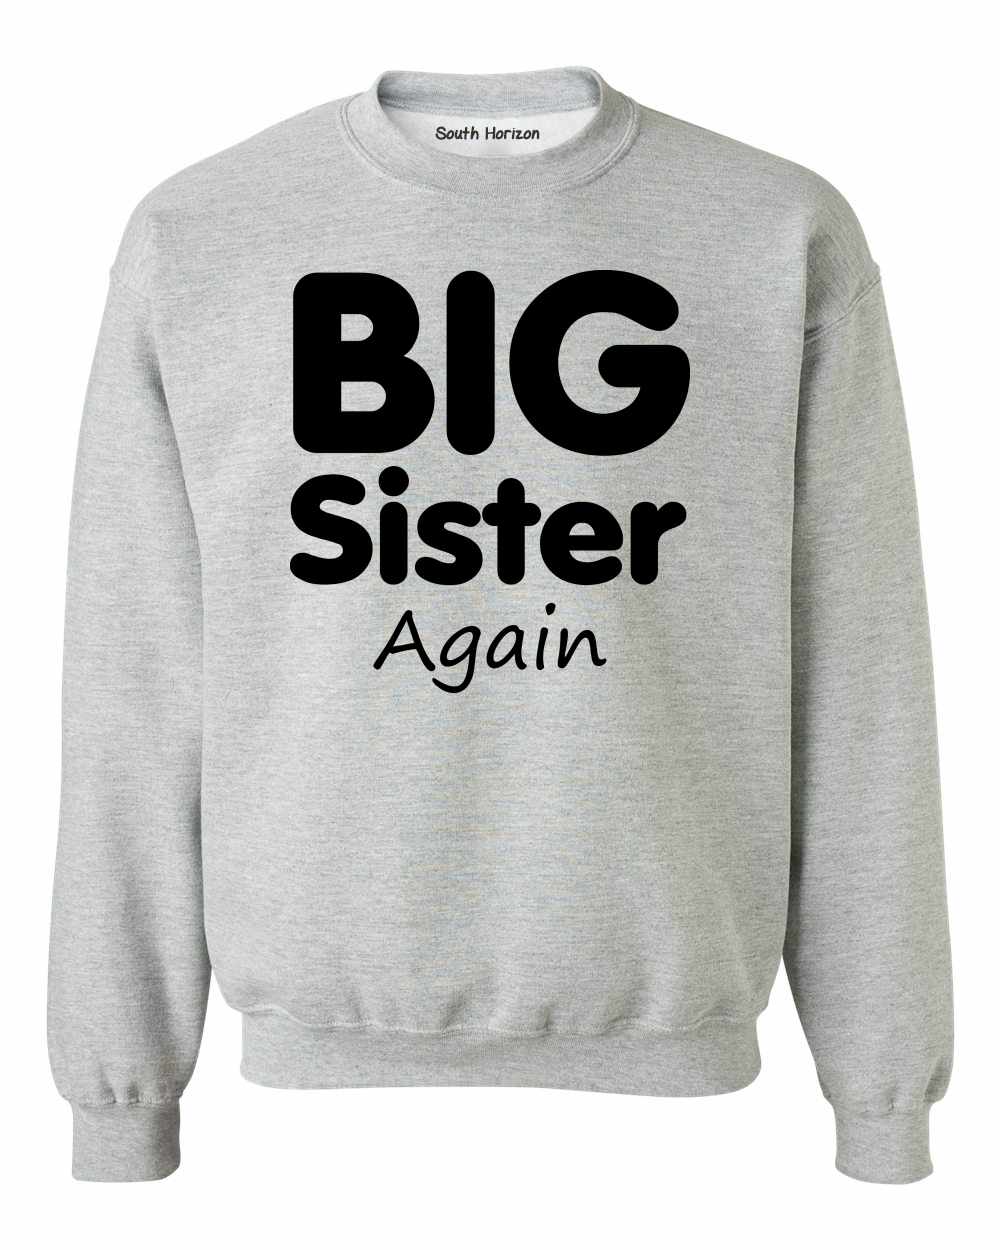 Big Sister Again on SweatShirt (#859-11)